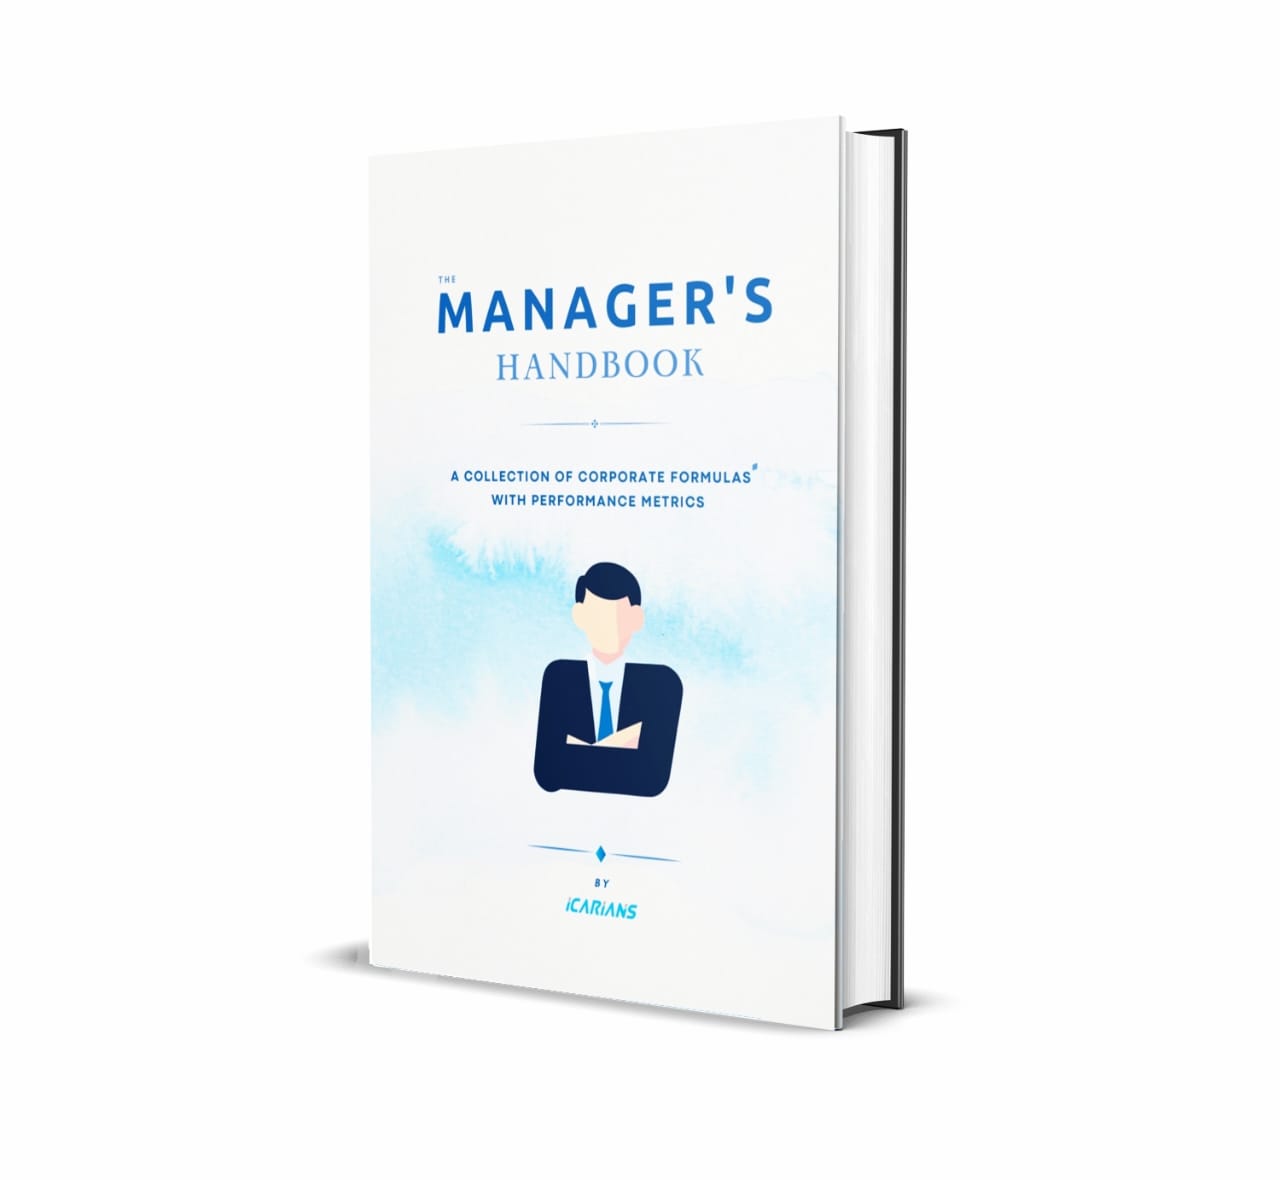 The Manager Handbook